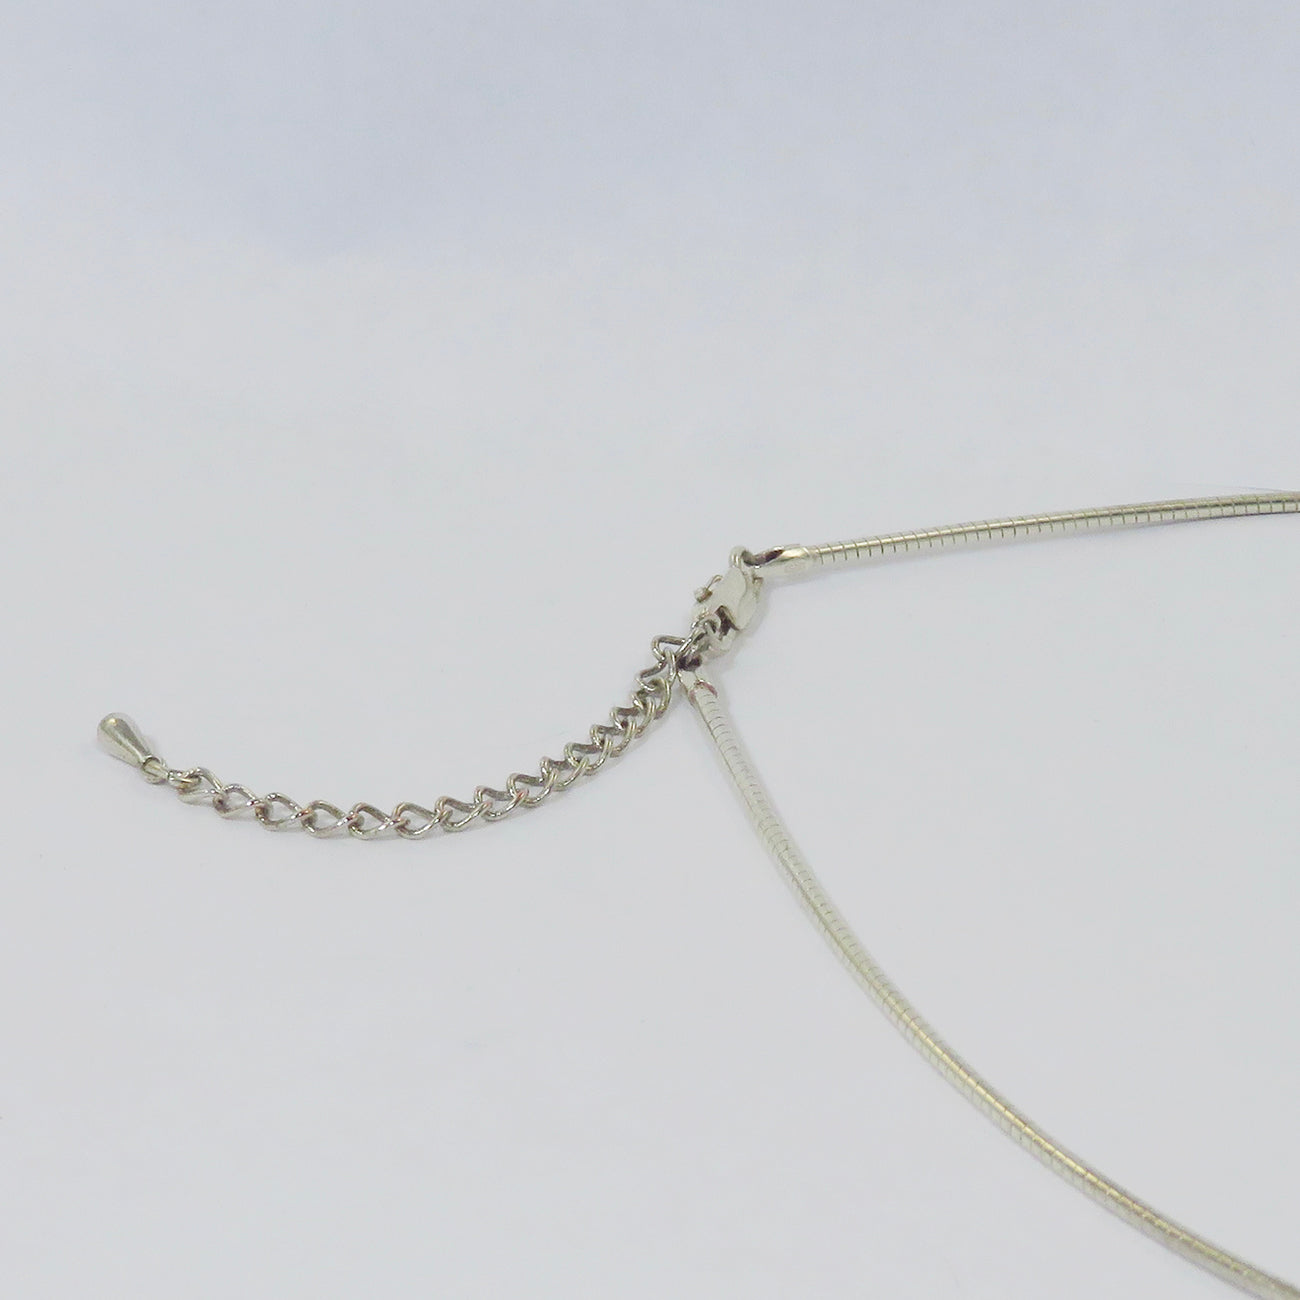 Detail of chain Silver Cloisonne Enamel Pendant & chain handmade by Laura Haszard